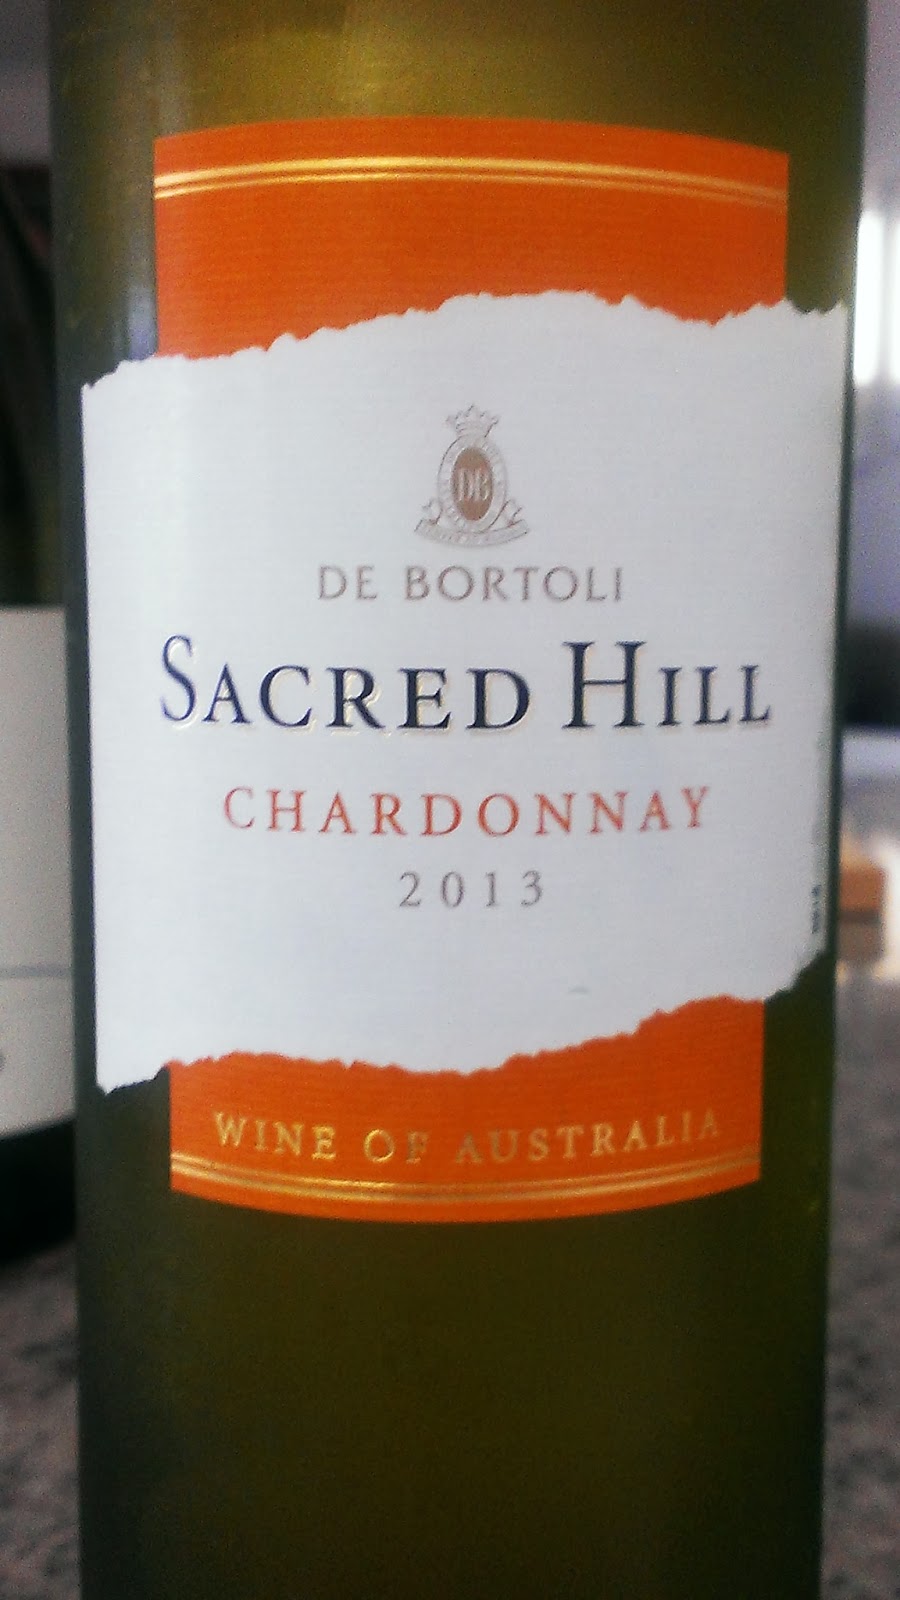 QWine - Australian Wine Reviews: De Bortoli Sacred Hill Chardonnay 2013